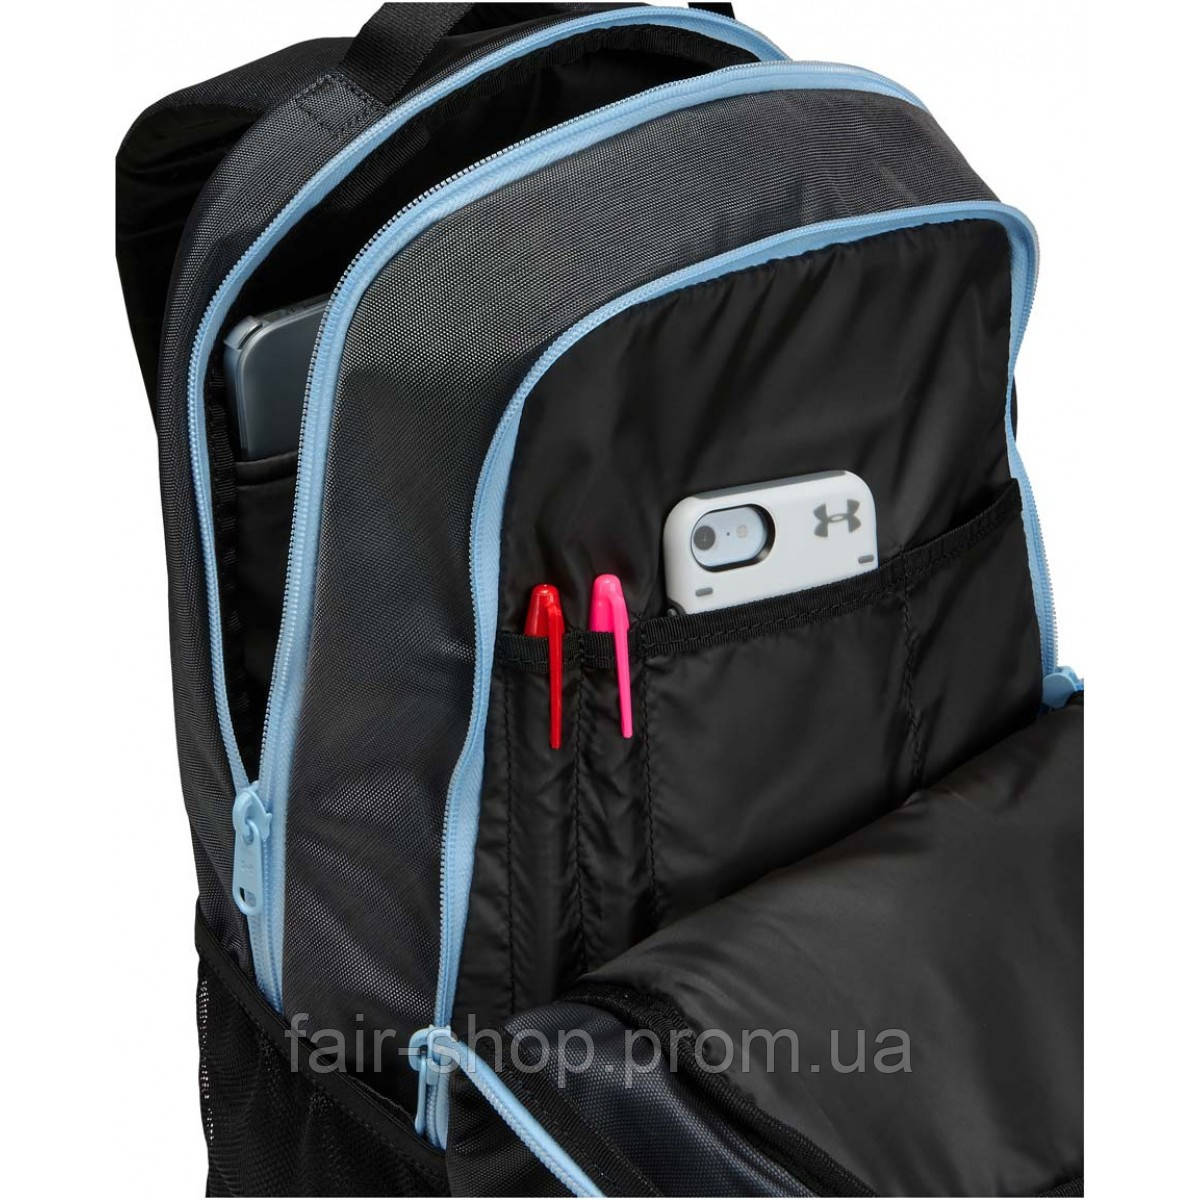 ua imprint backpack